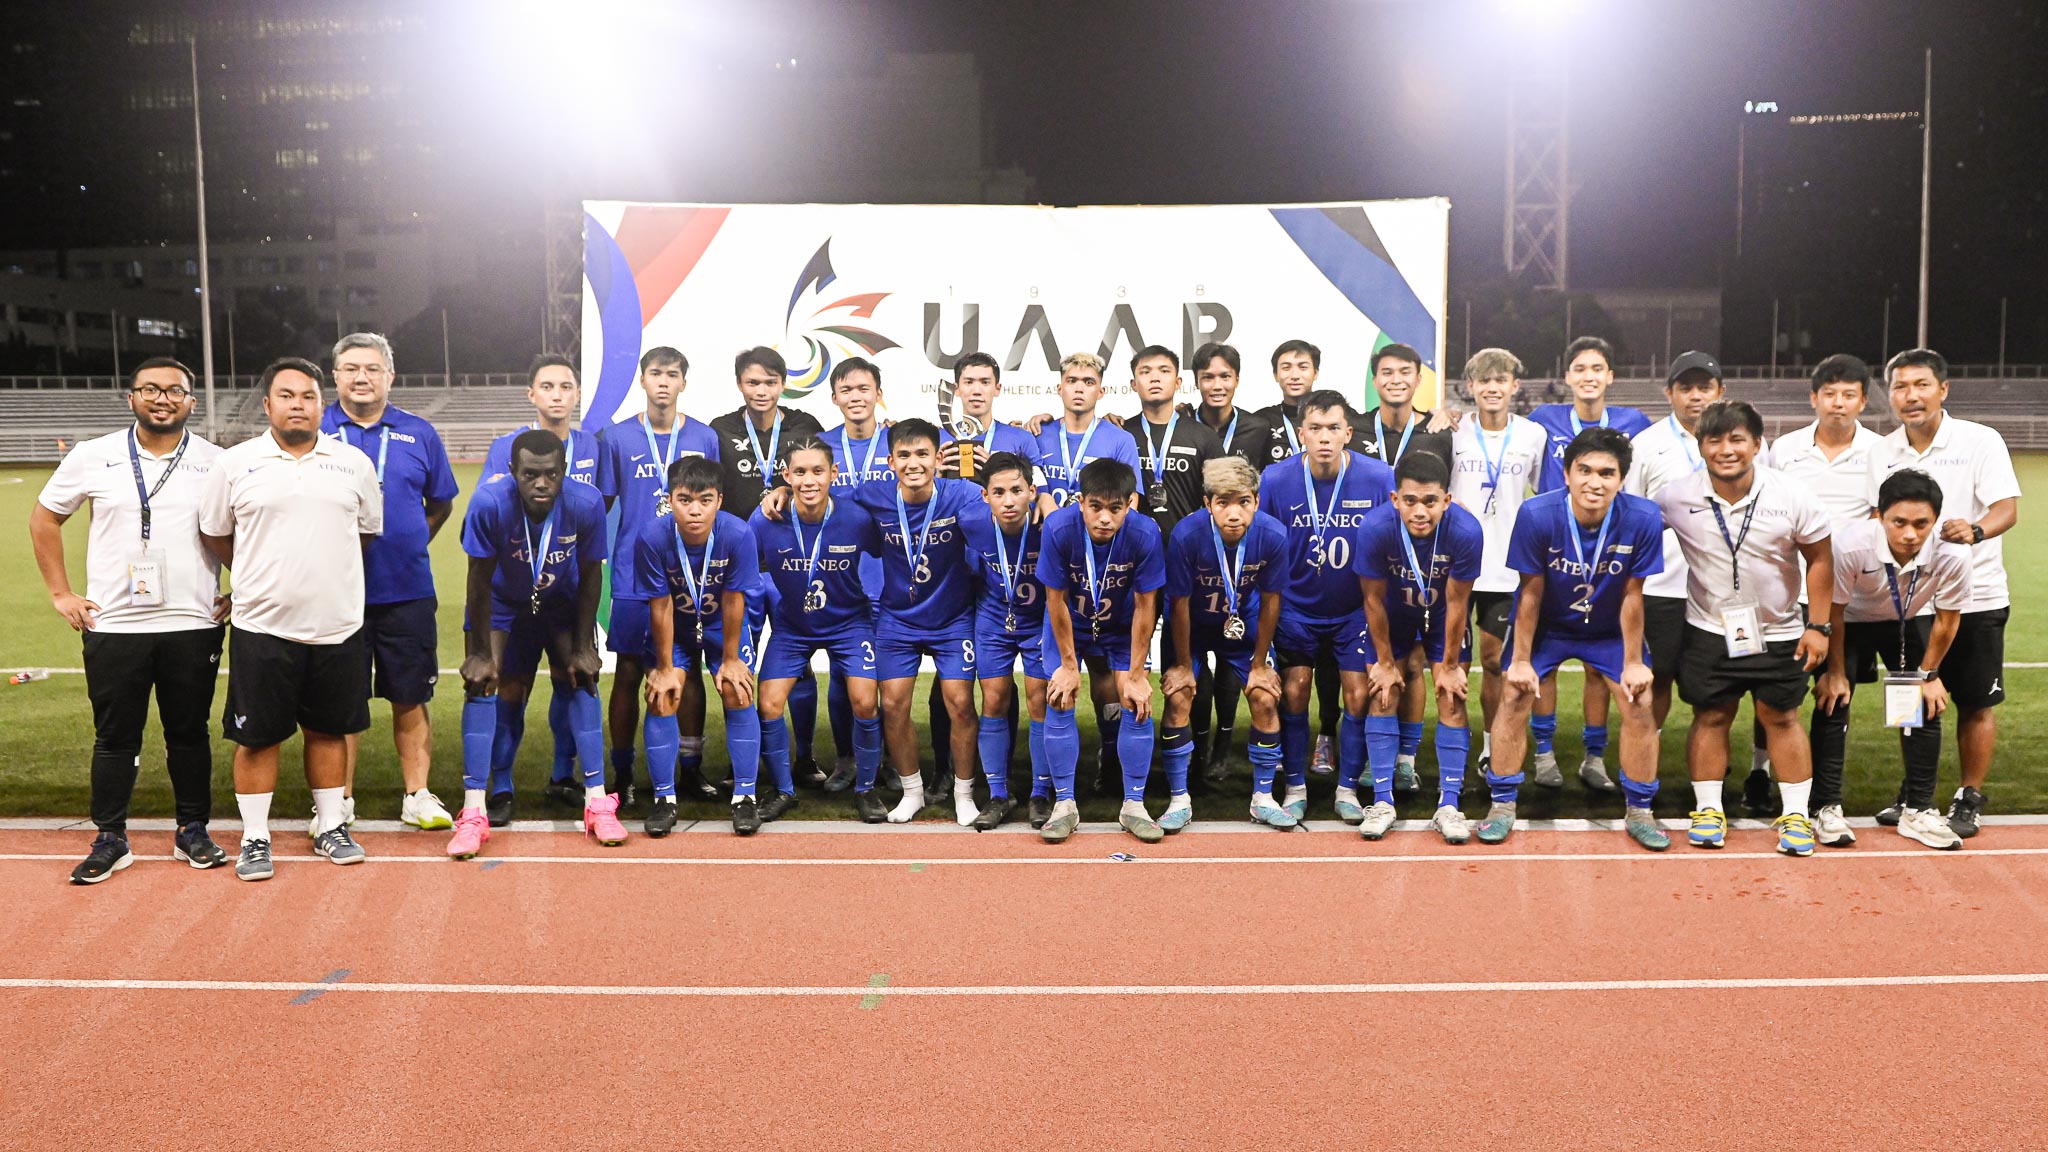 UAAP85-MFB-Champions-1st-Runner-Up-Ateneo-7806119 Despite being dethroned, Szy Mercado, Ateneo still hold heads up high ADMU Football News UAAP  - philippine sports news